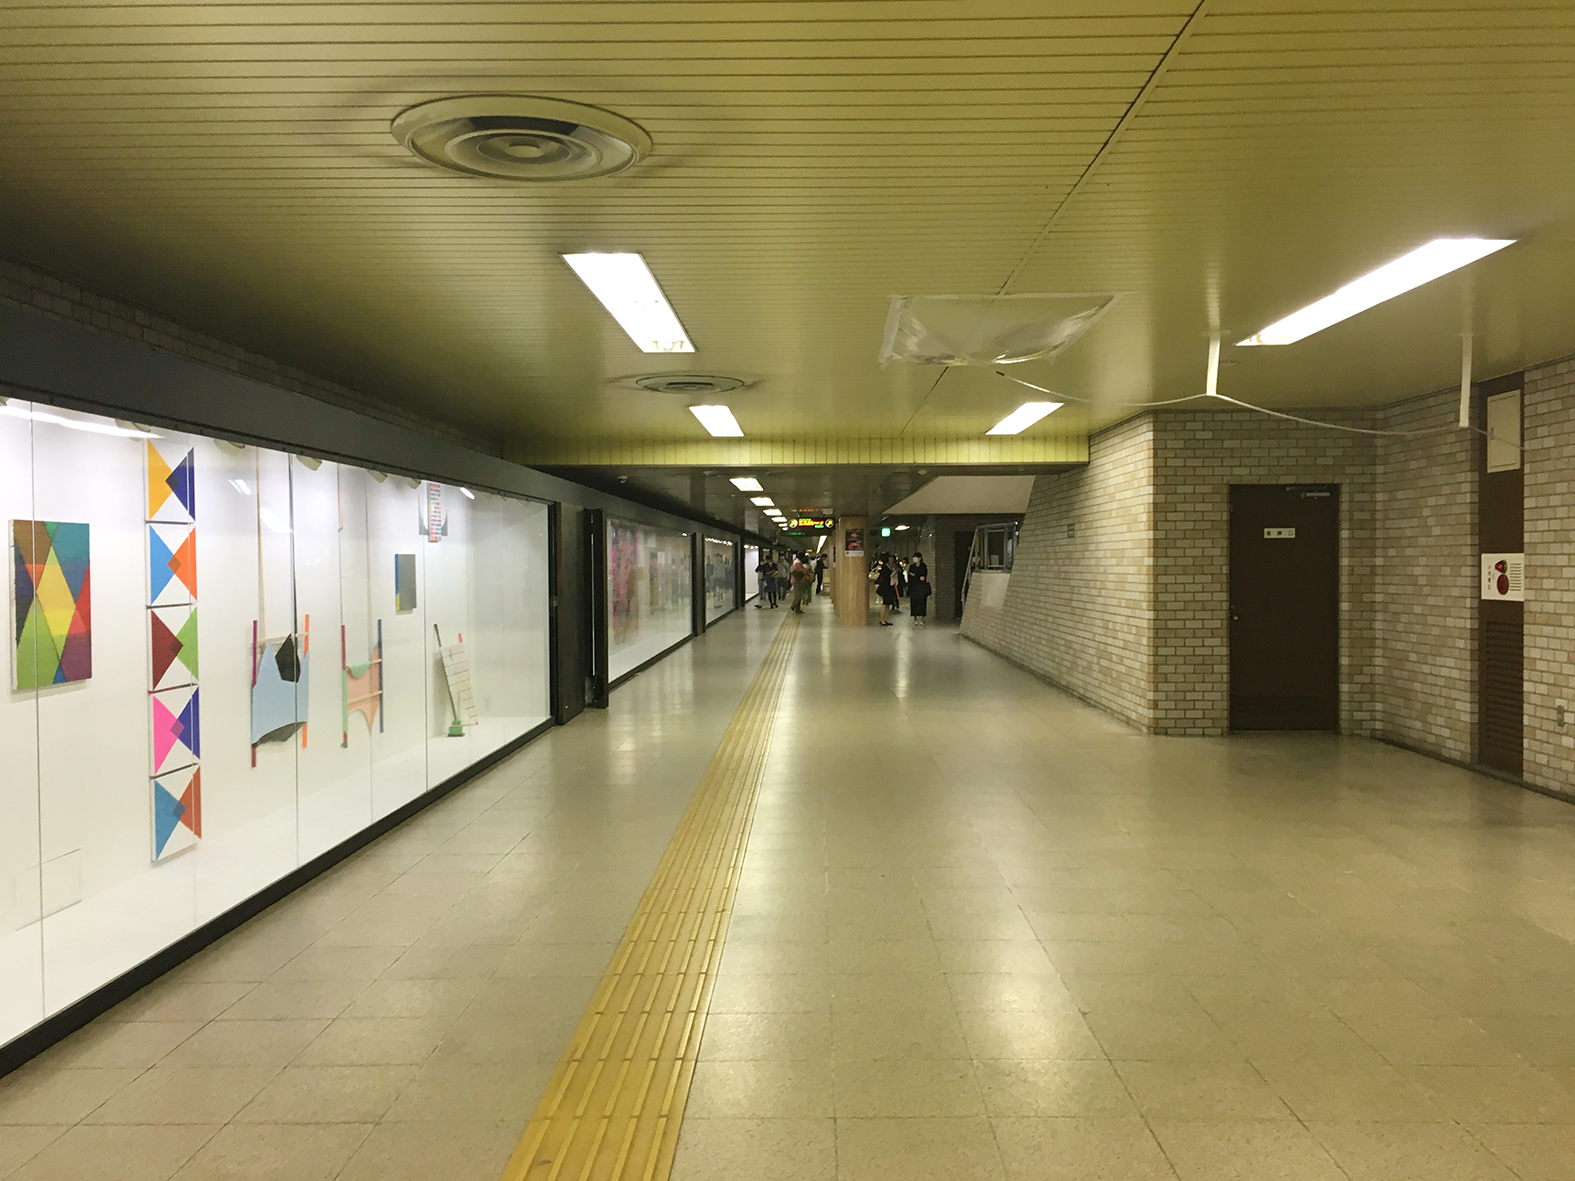 Installation view of the 2018 exhibition :  "Current Location of Paintings", Sapporo Odori 500-m Underground Walkway Gallery, Hokkaido, Japan